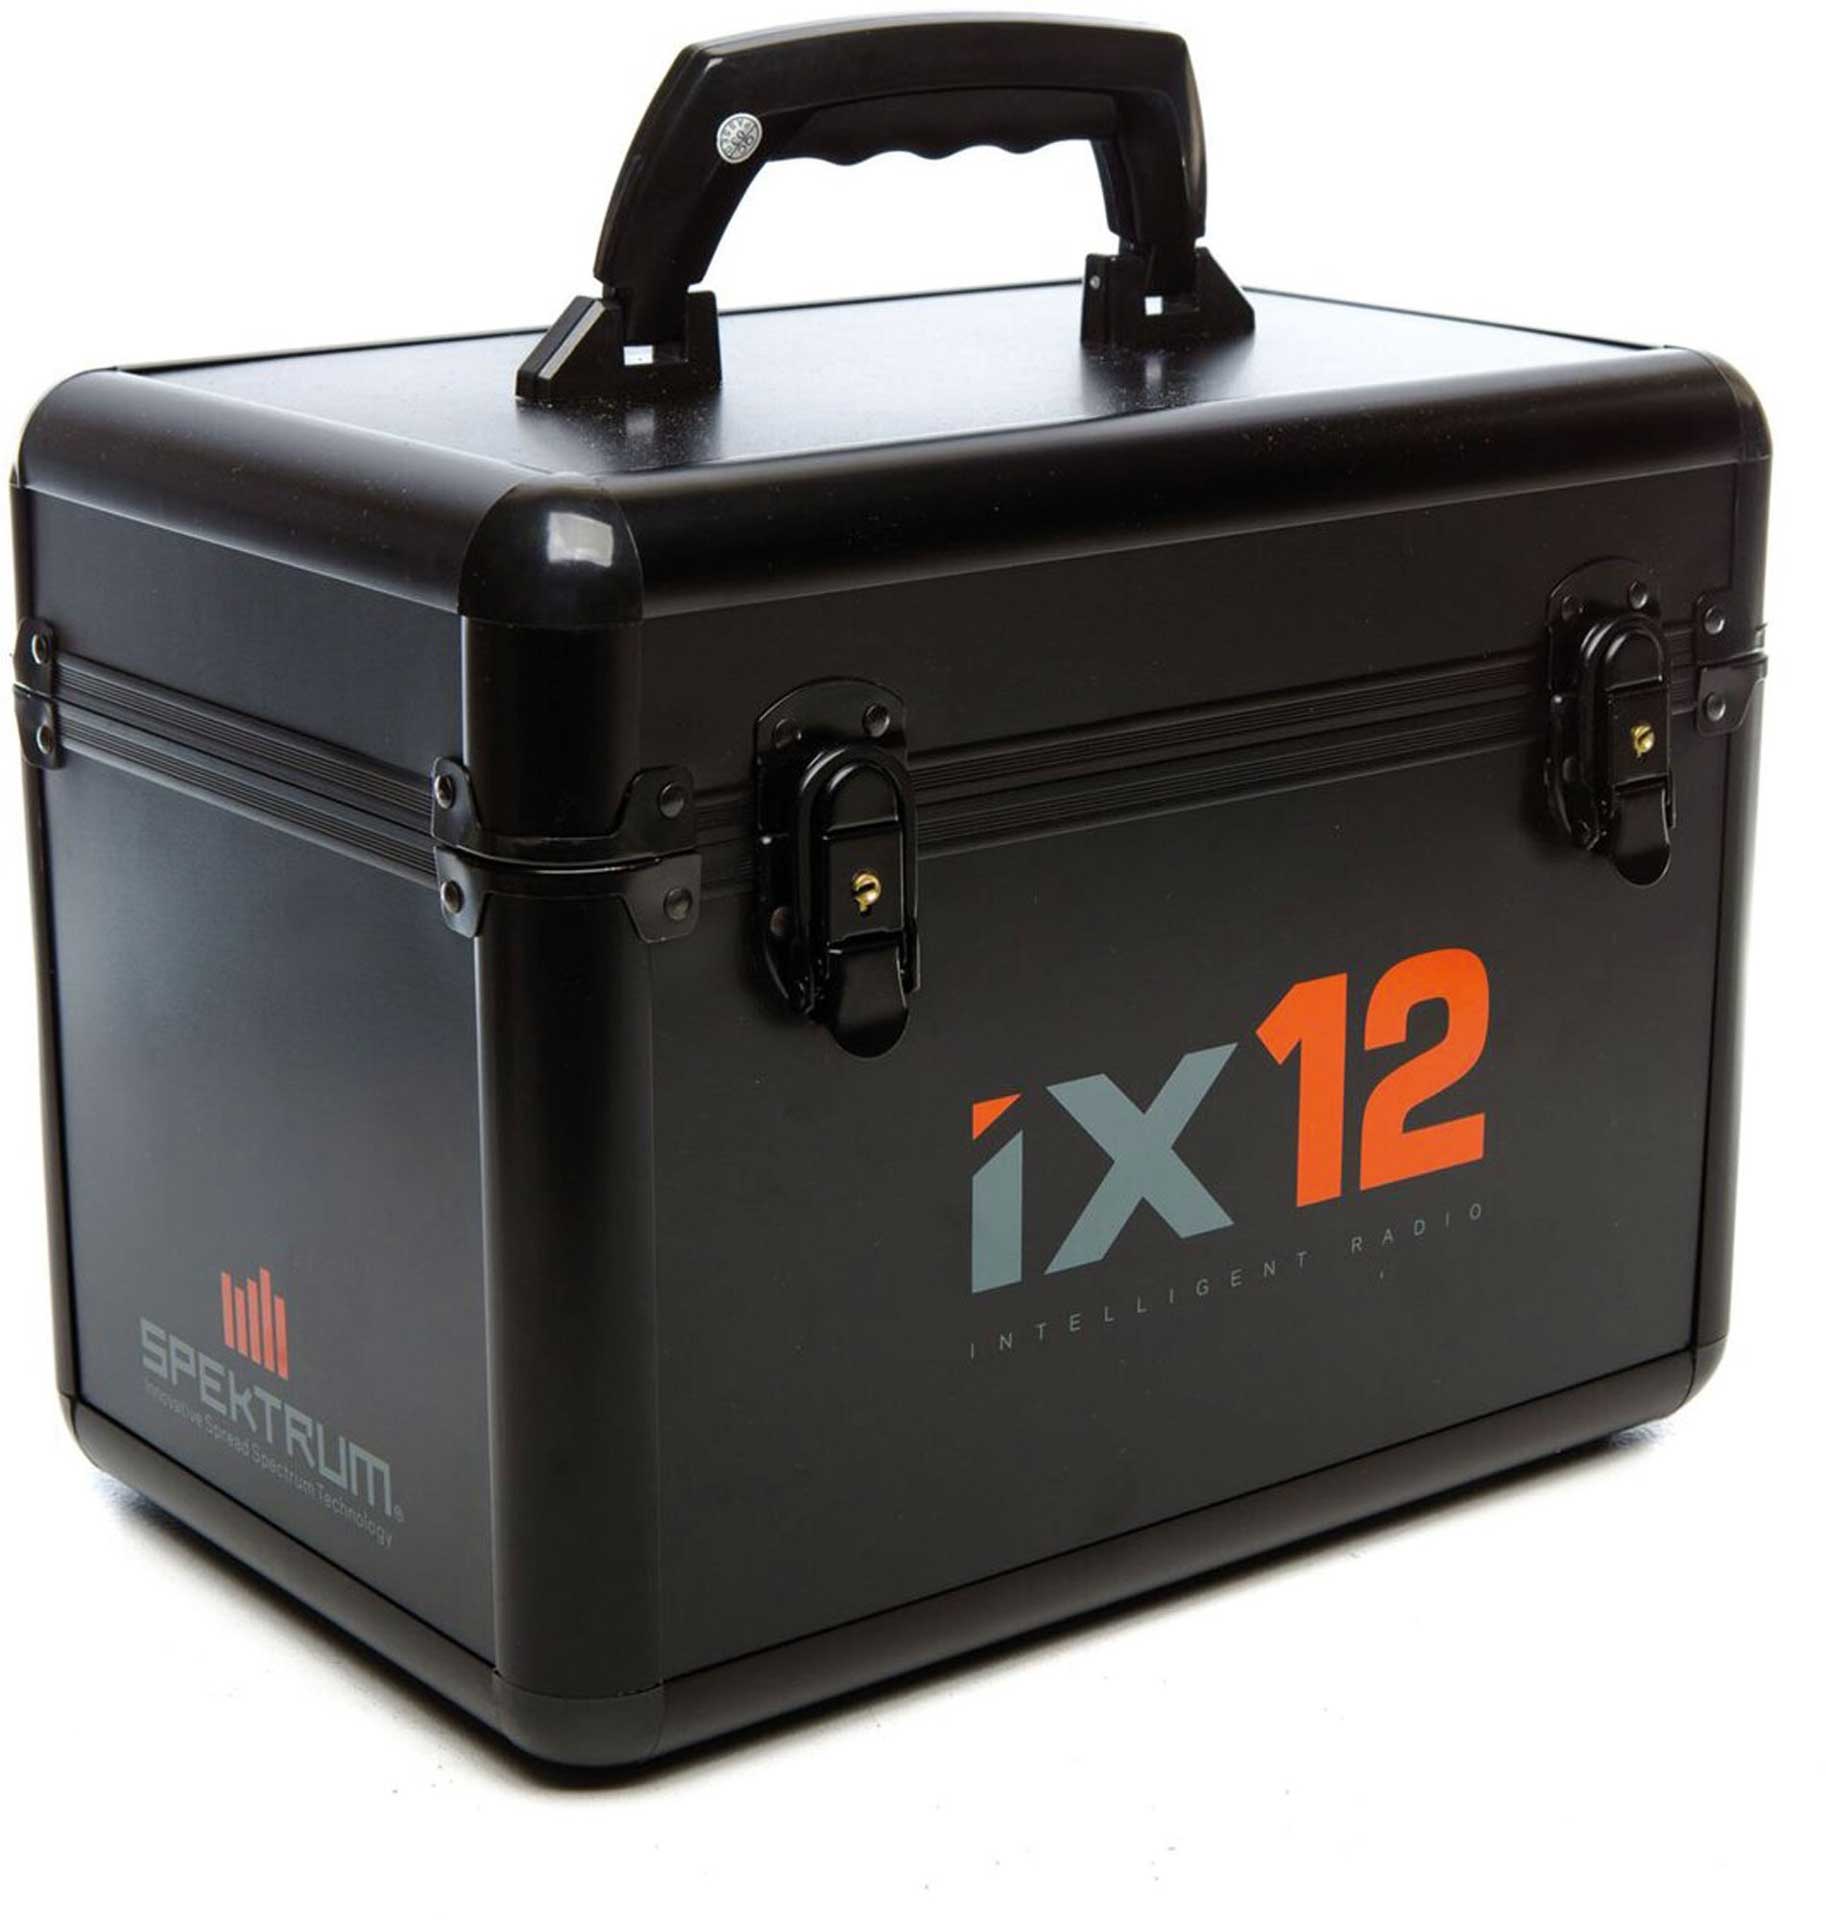 iX12 Spektrum Air Transmitter Case